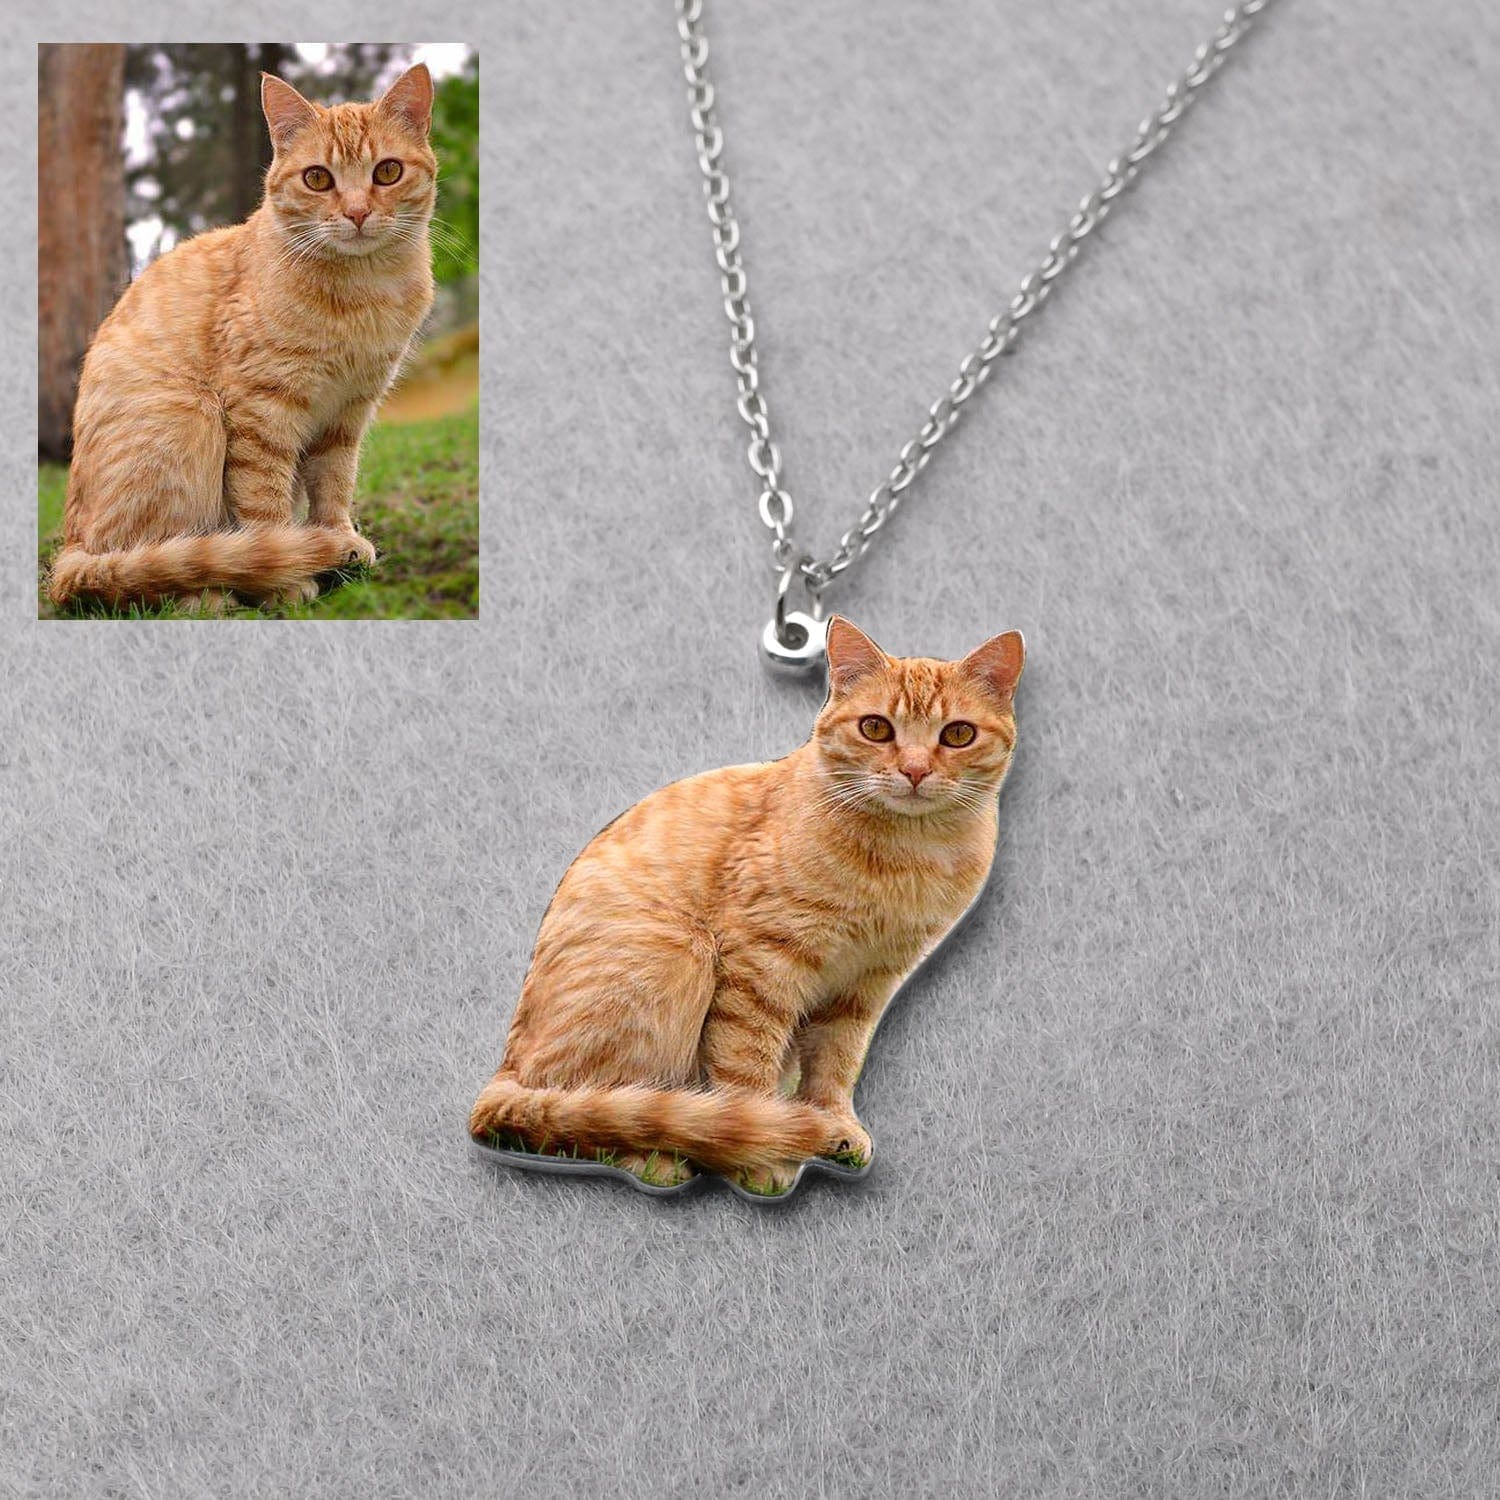 Personalized Pet Photo Necklace